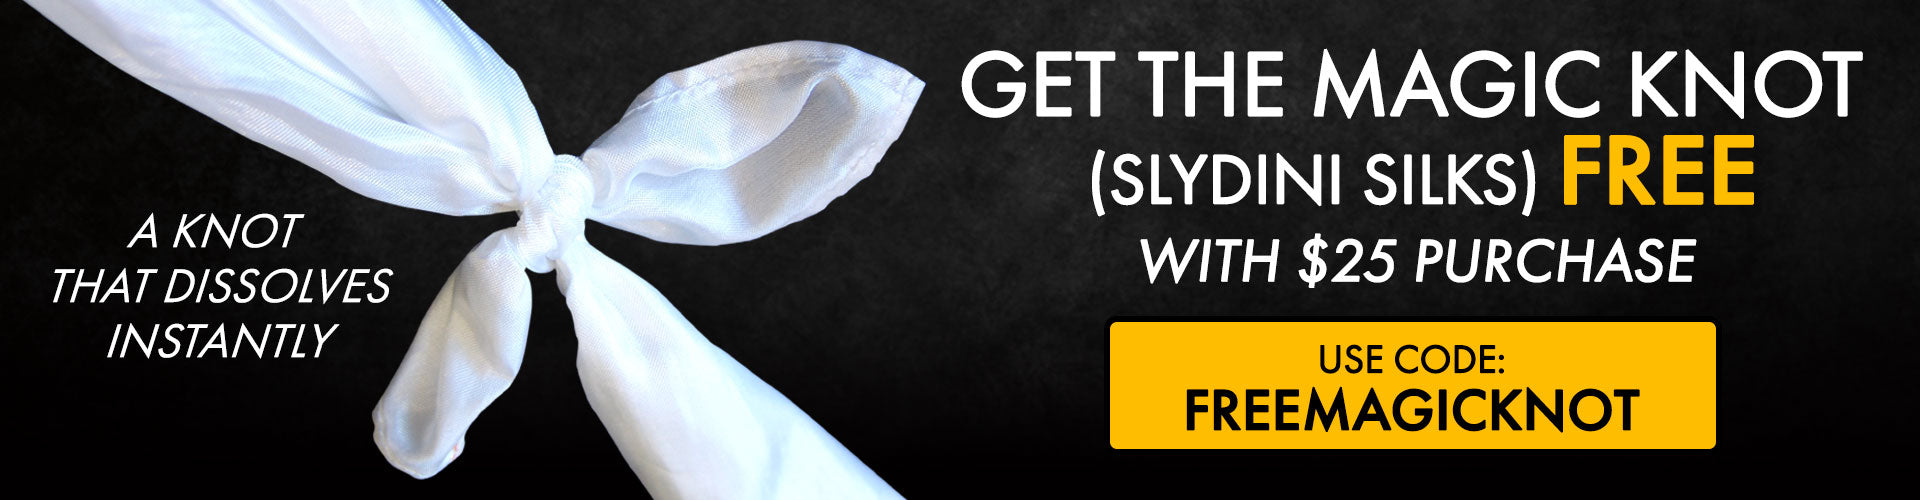 Magic Knot Slydini Silks - Essential For The Performer